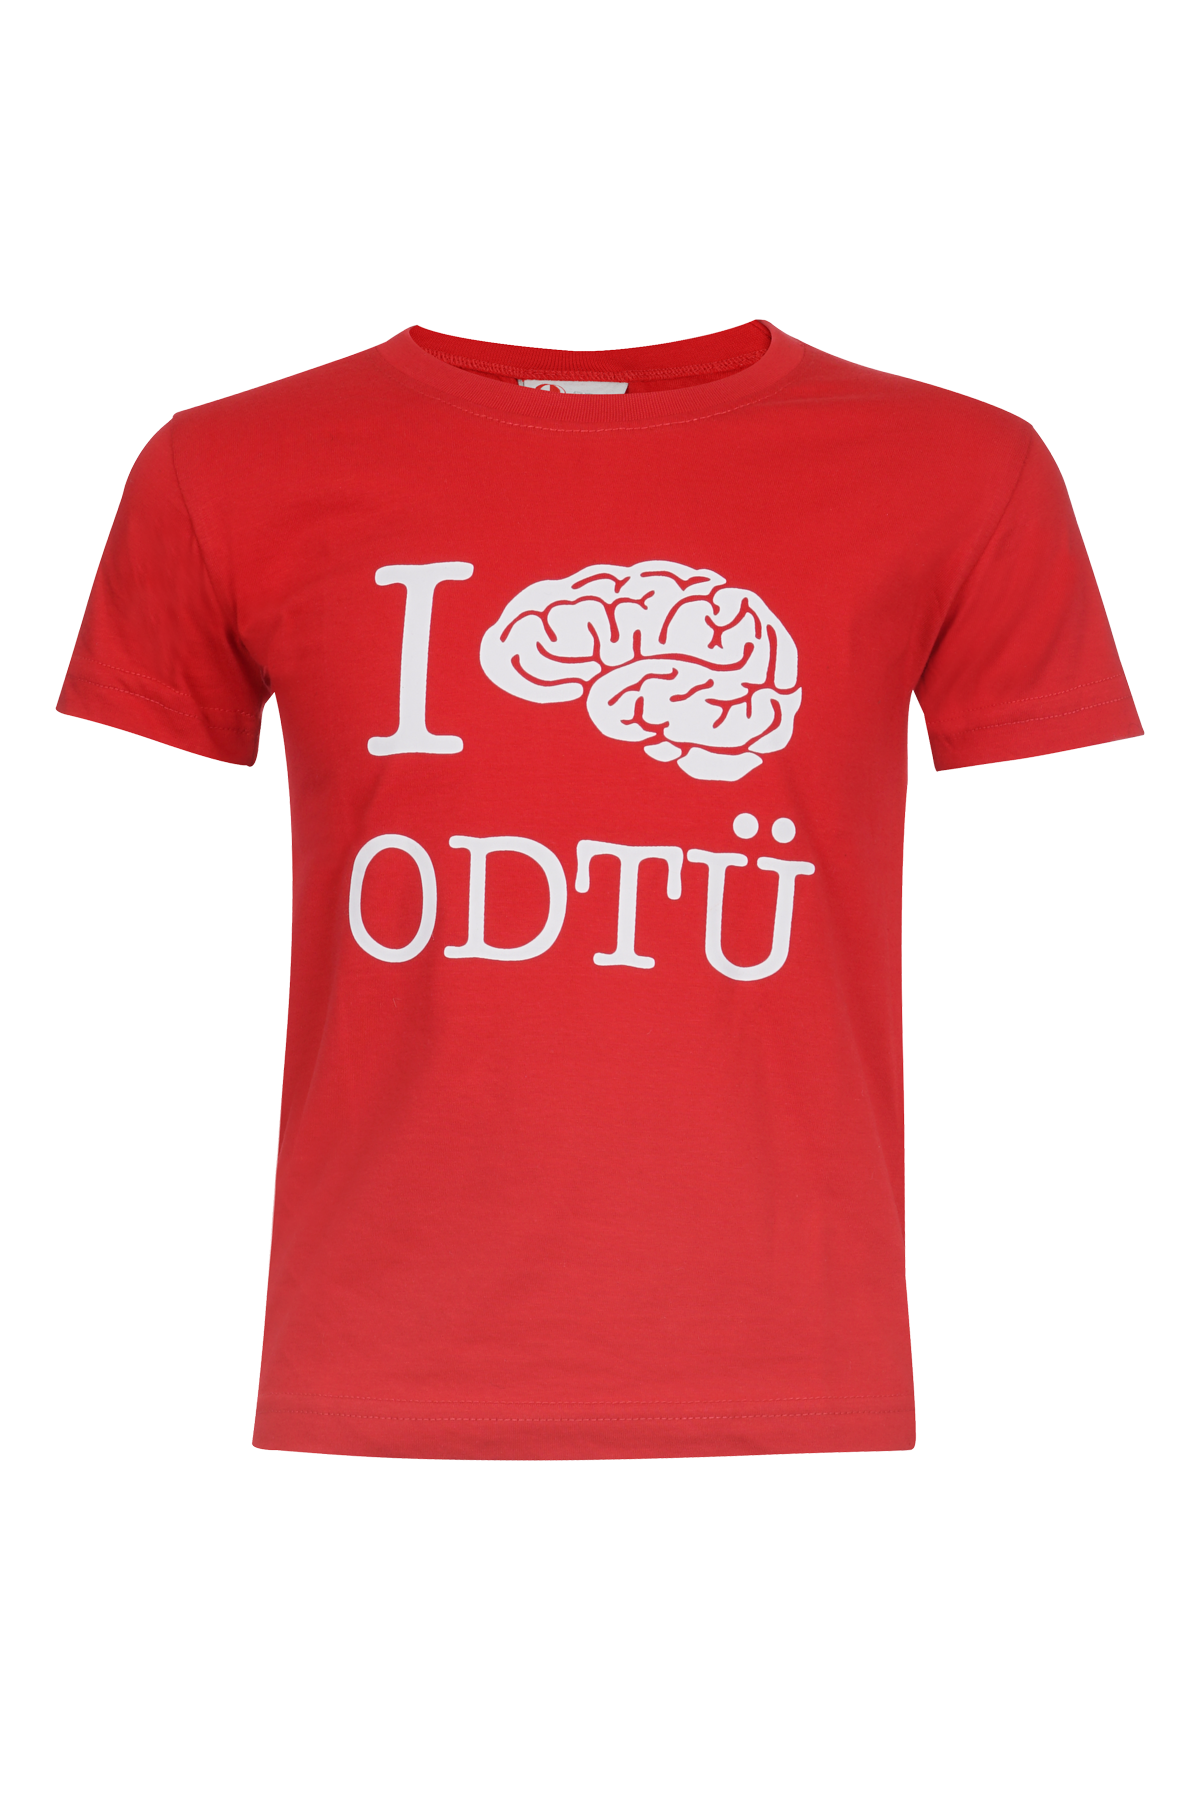 I Think of ODTÜ - Çocuk T-shirt (Kırmızı)